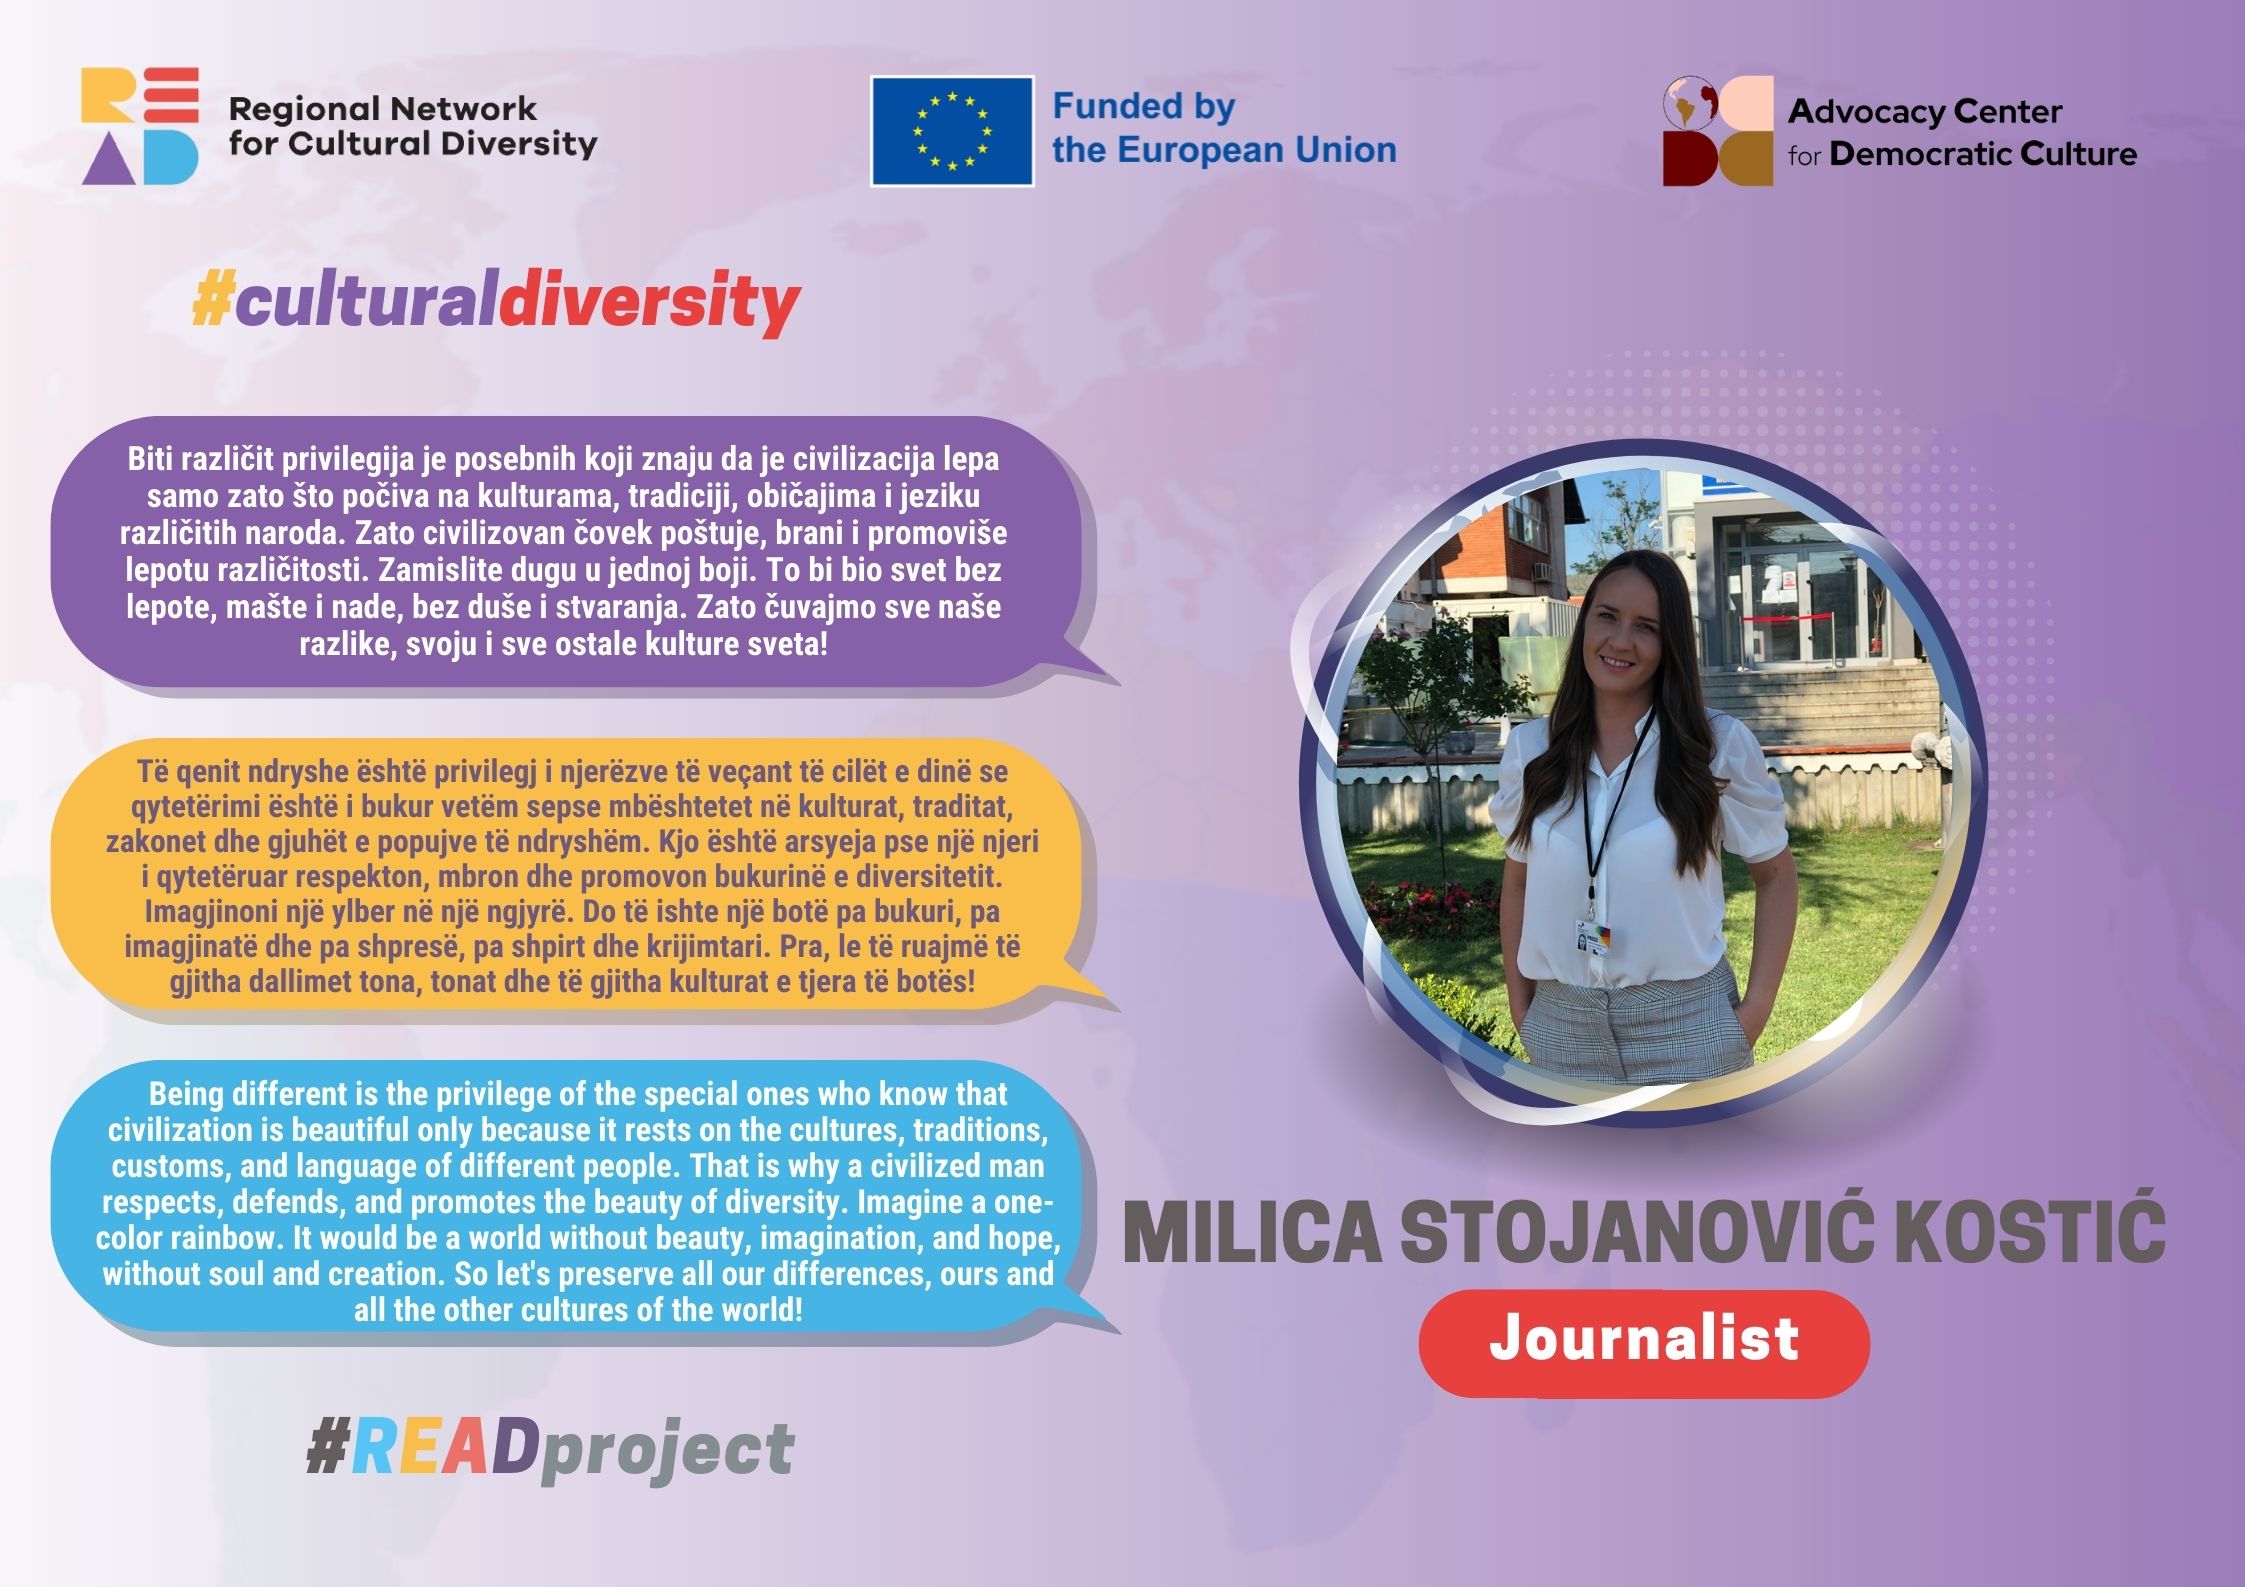 public-campaign-on-cultural-diversity-milica-stojanovic-kostic